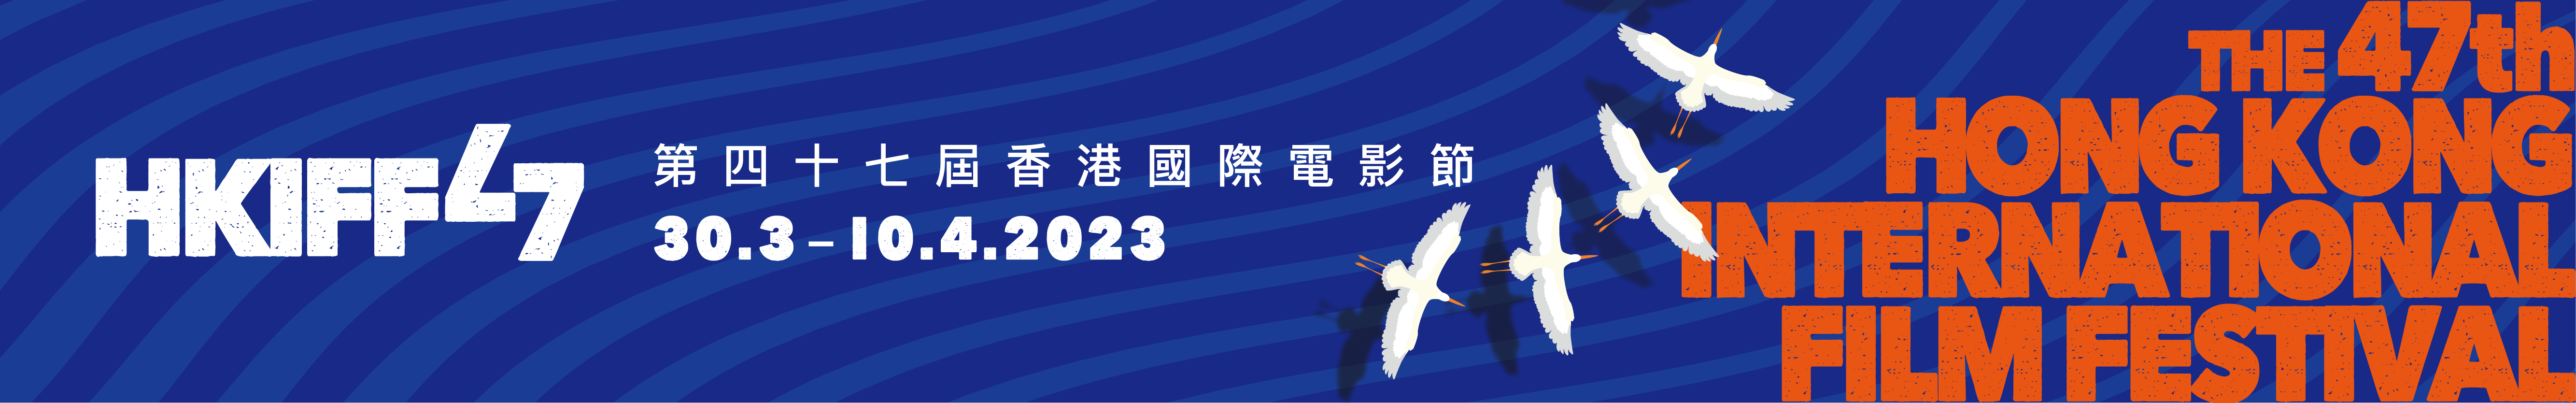 The 47th Hong Kong International Film Festival